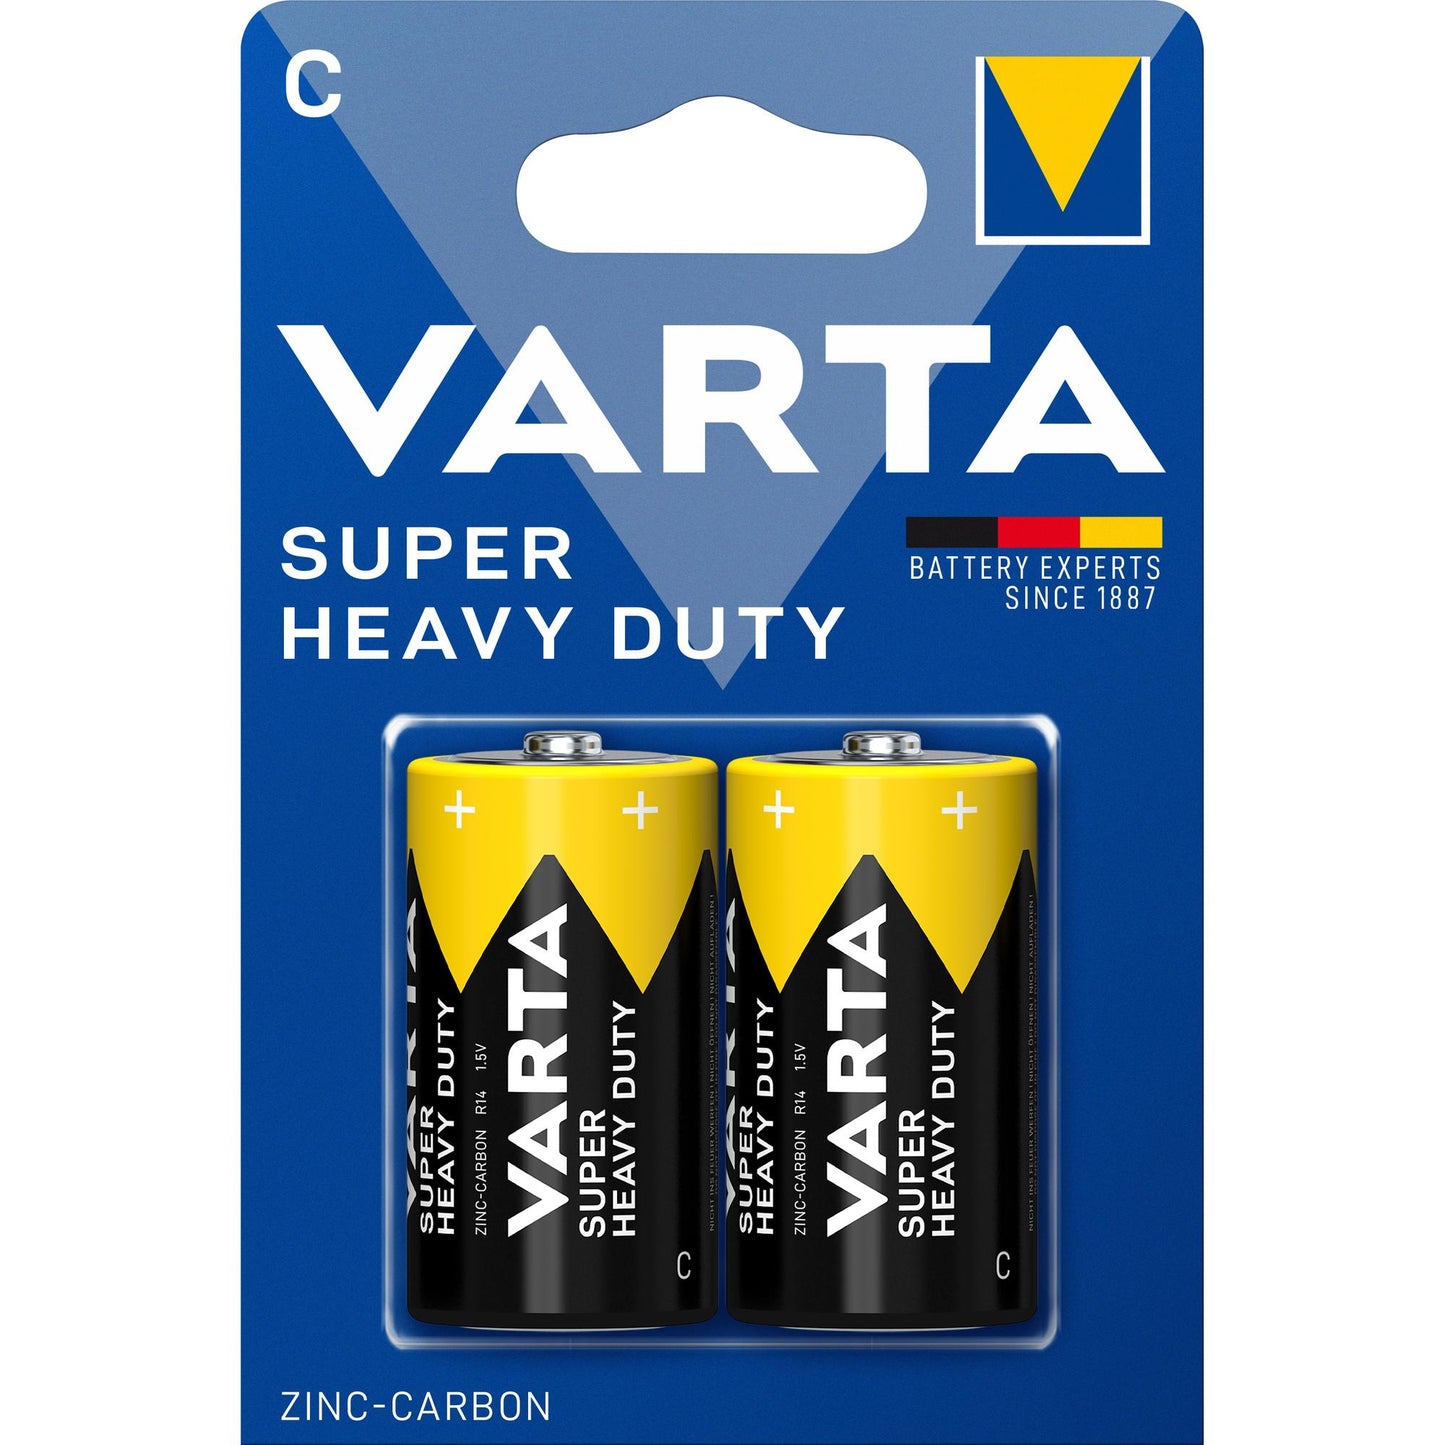 VARTA Batterie Zink-Kohle Baby C R14, 1.5V Superlife, Retail Blister (2-Pack)